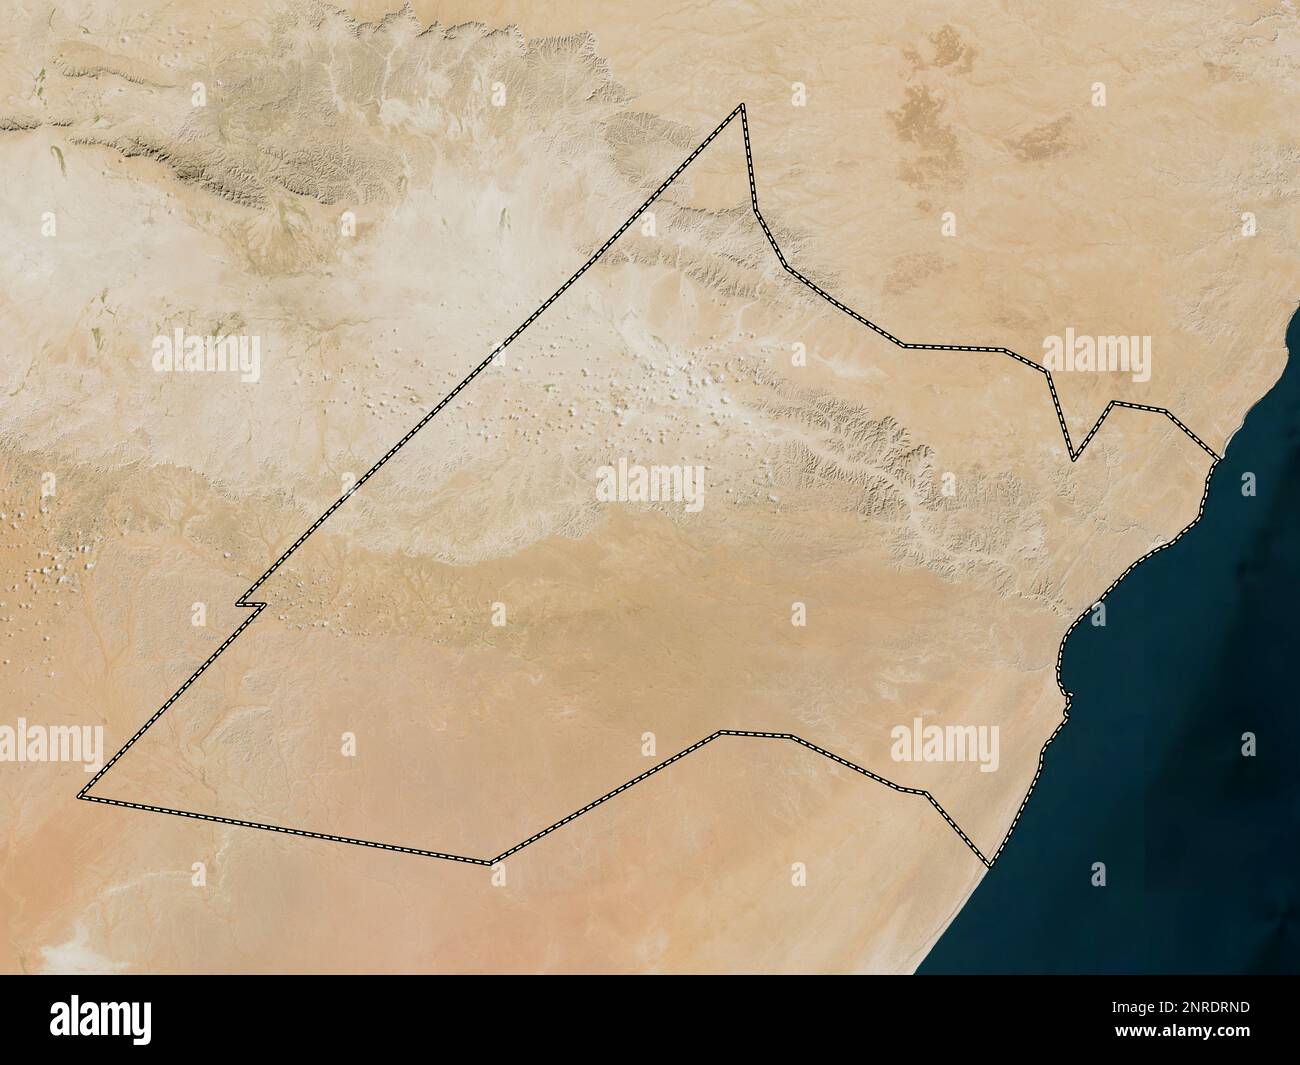 Nugaal, region of Somalia. Low resolution satellite map Stock Photo